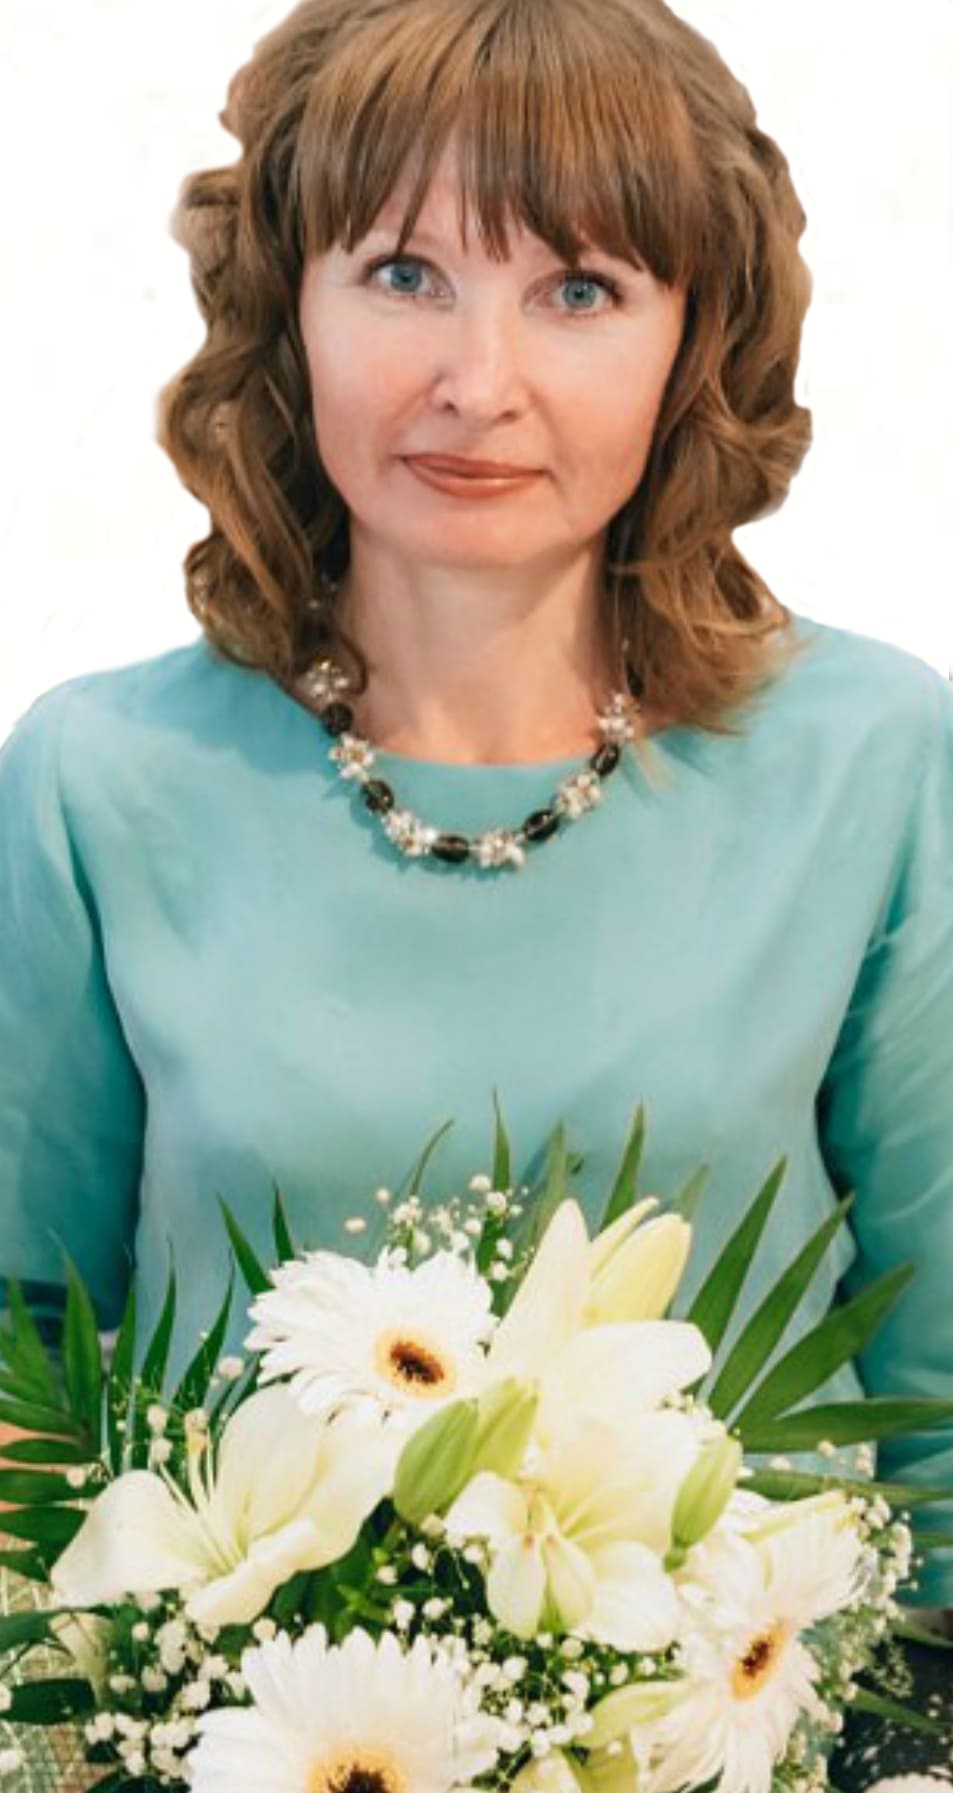 Иванова Ирина Витальевна